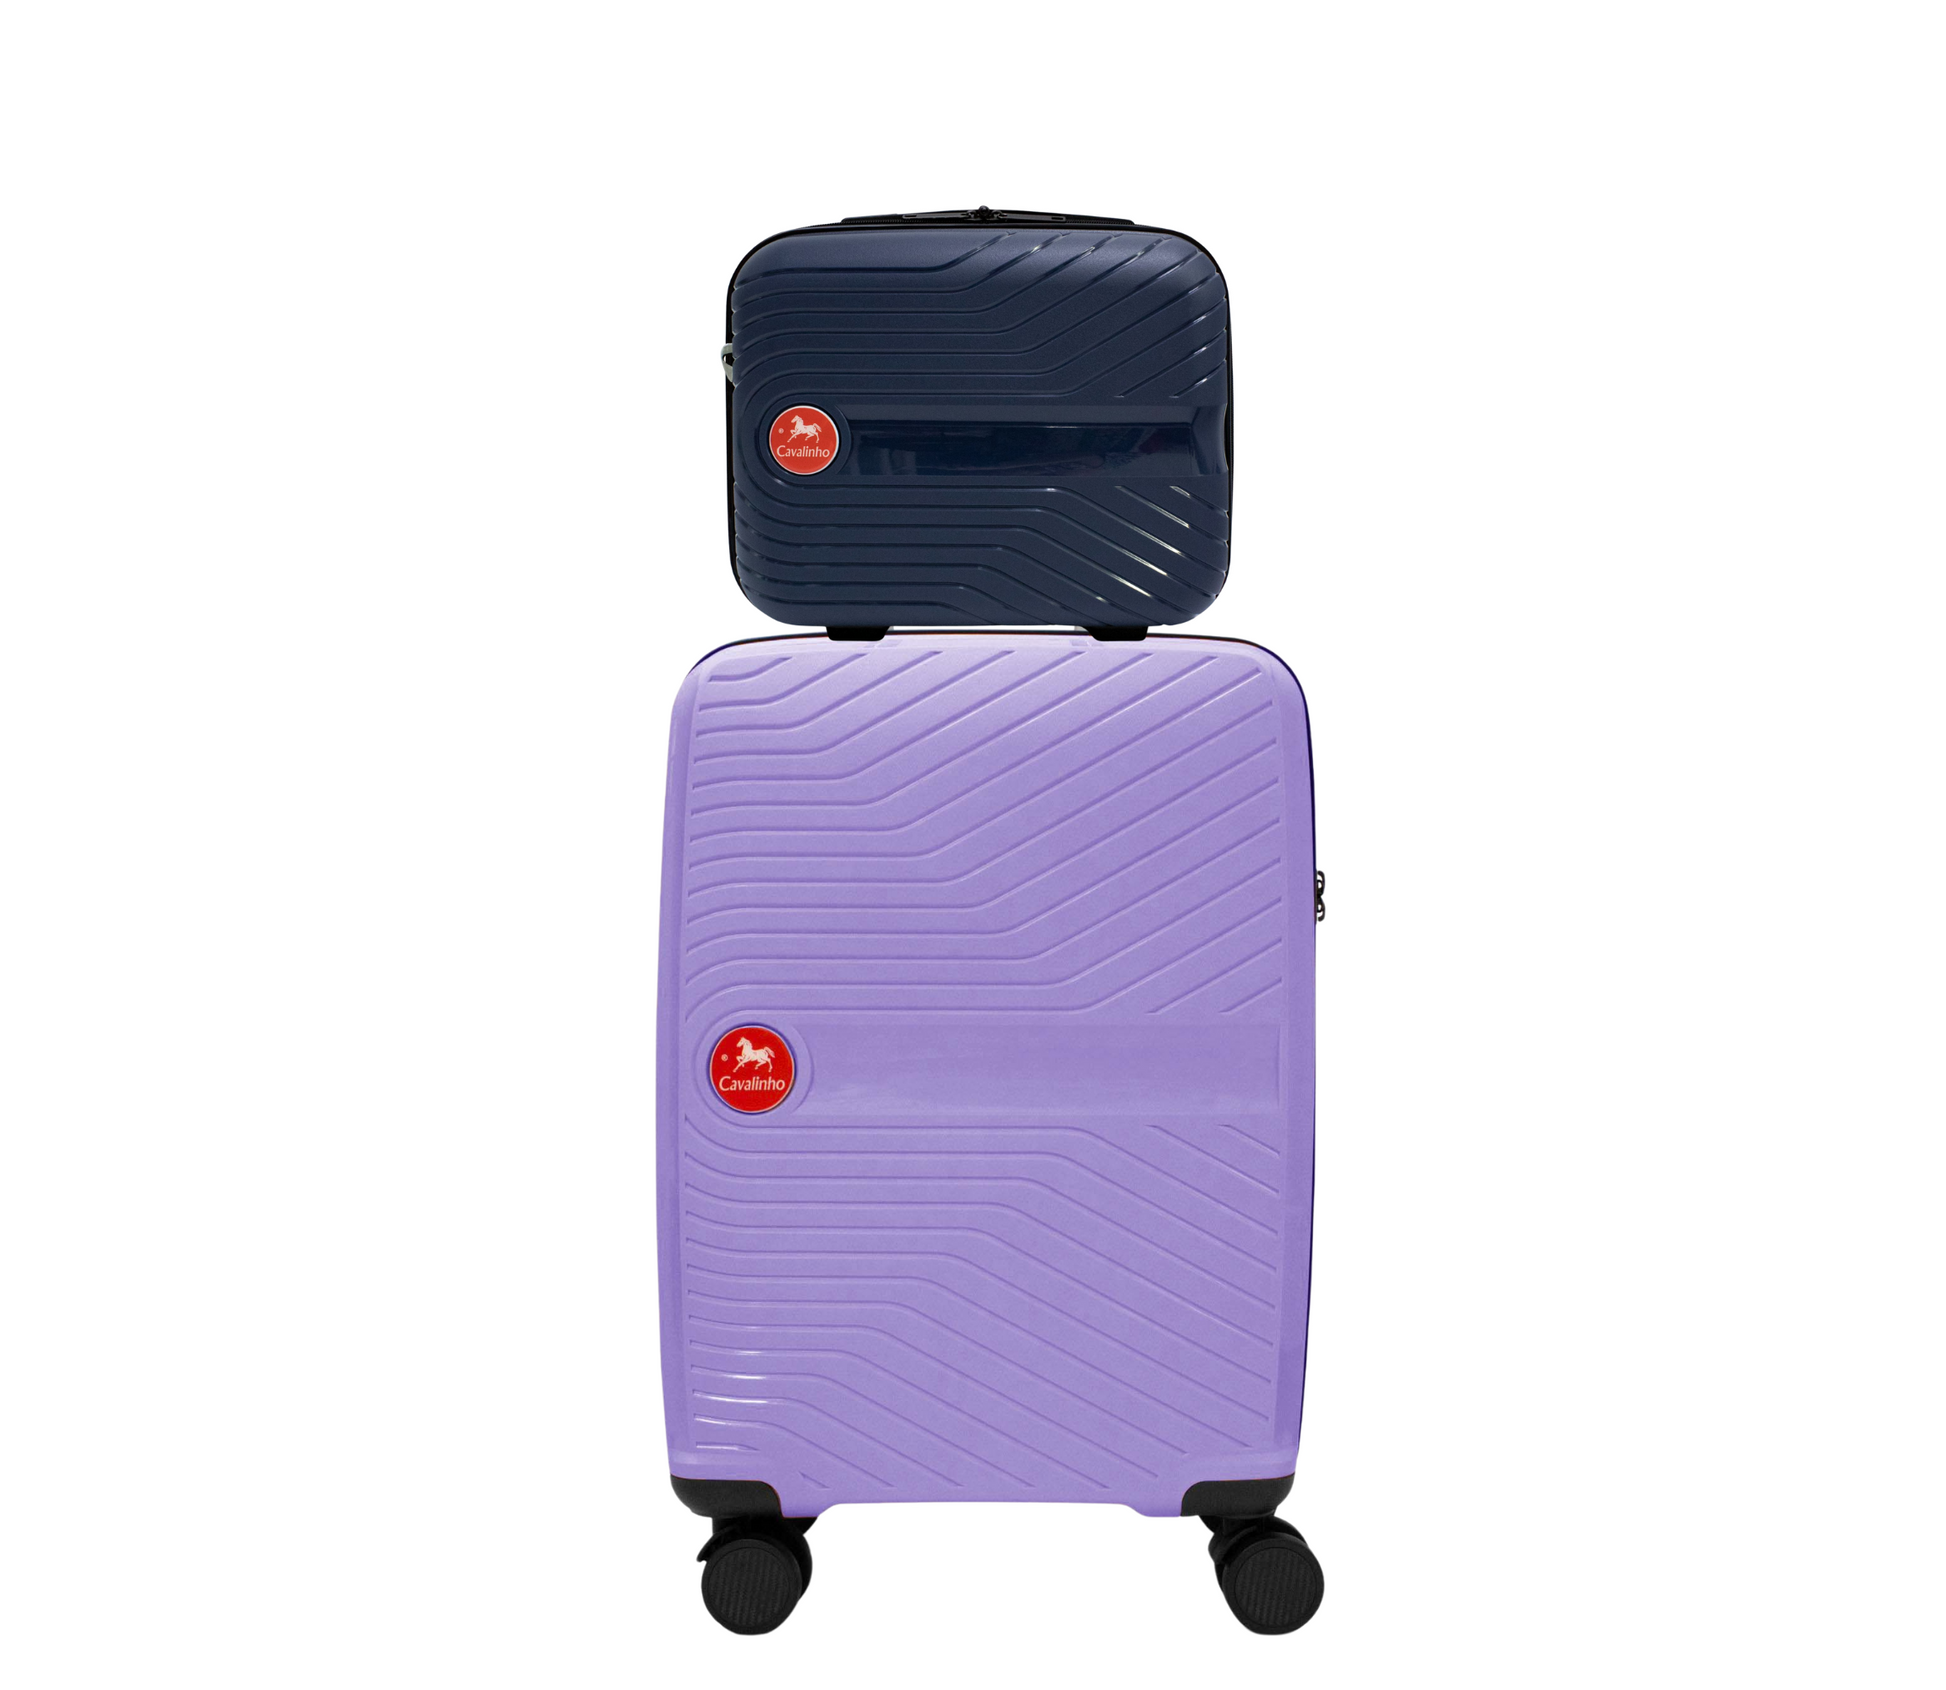 Cavalinho Colorful 2 Piece Luggage Set (15" & 19") - Navy Lilac - 68020004.0339.S1519._1